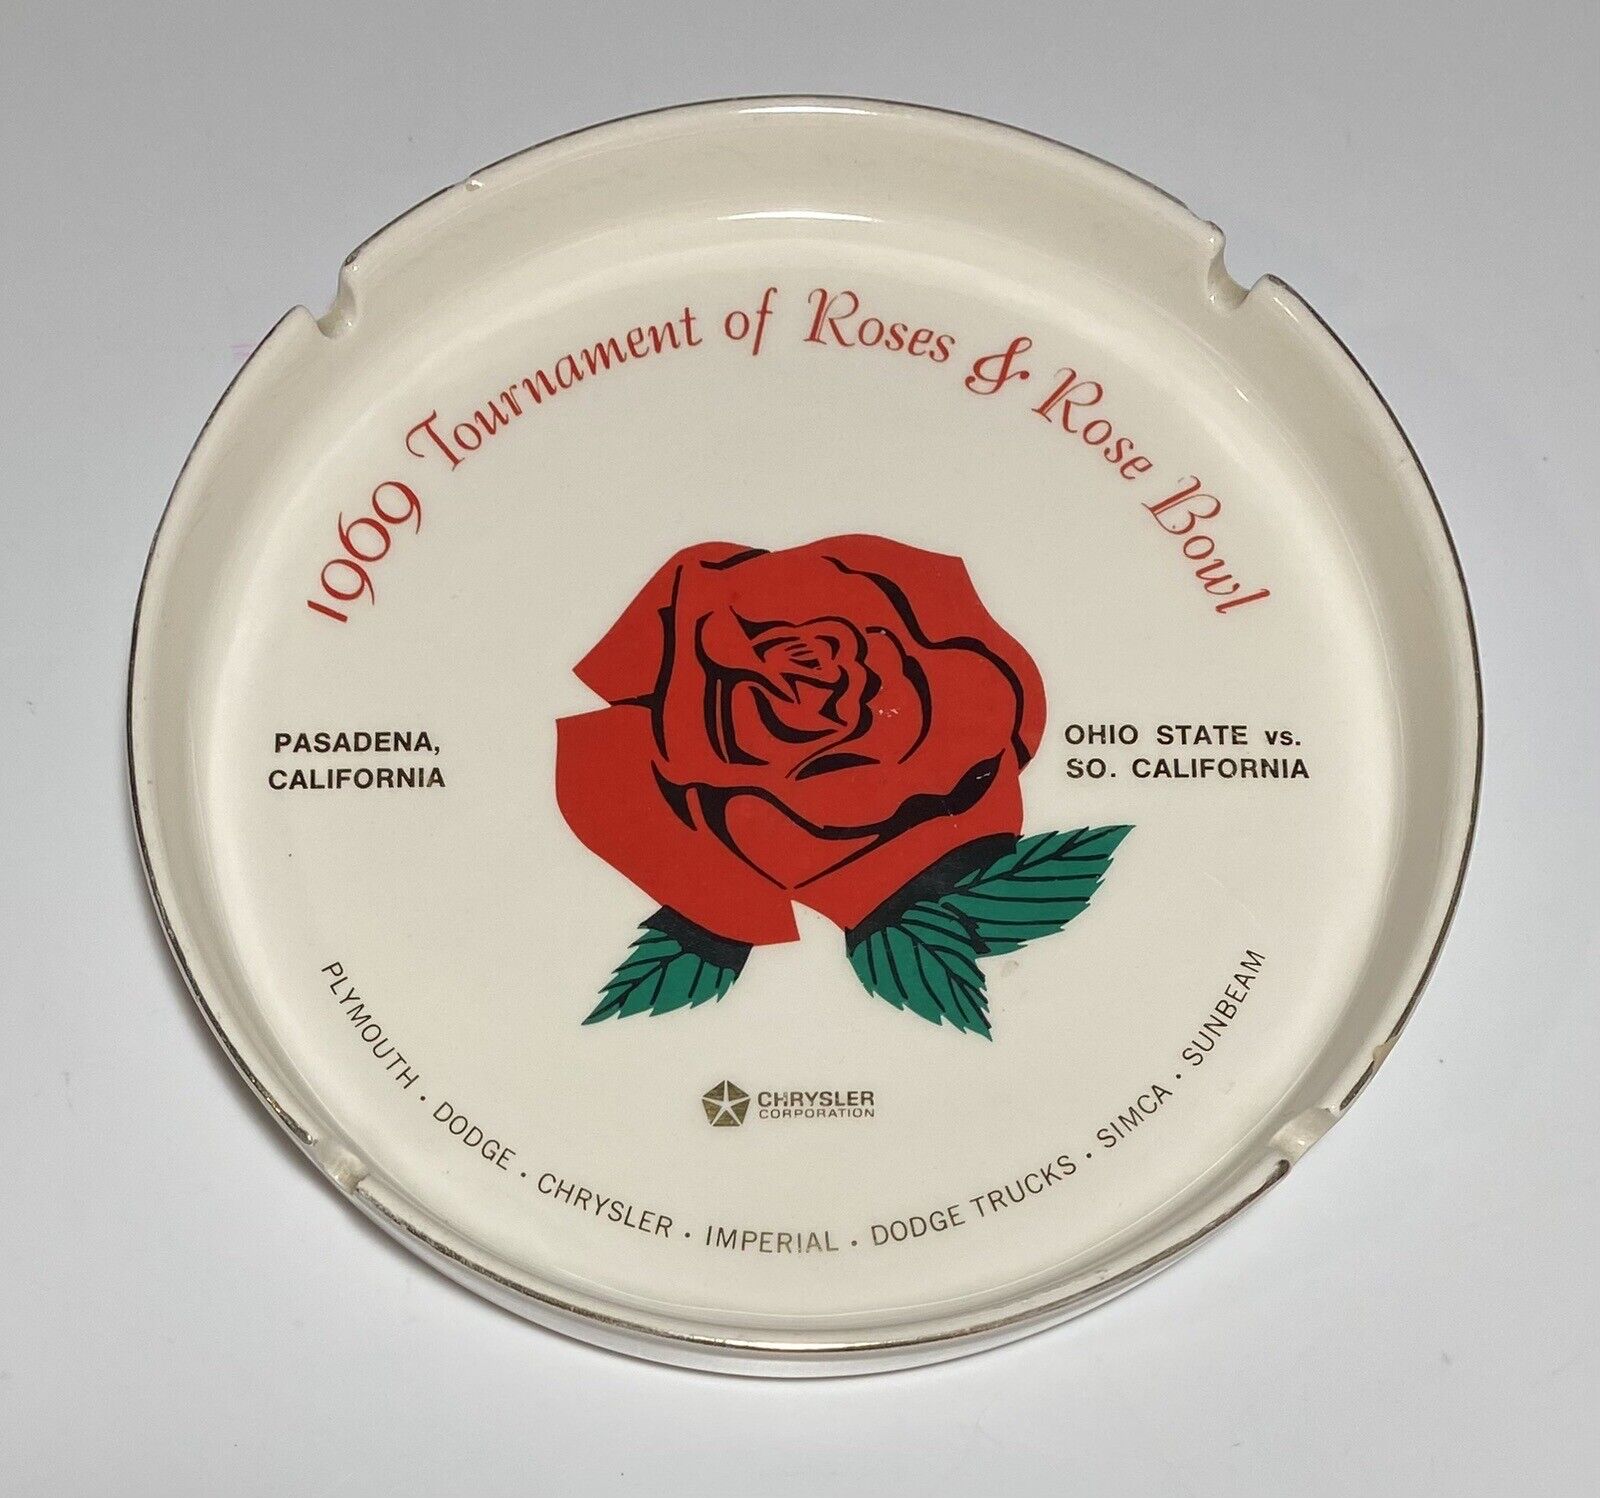 1969 Tournament of Roses Ashtray - Ohio State VS So. California - Rare